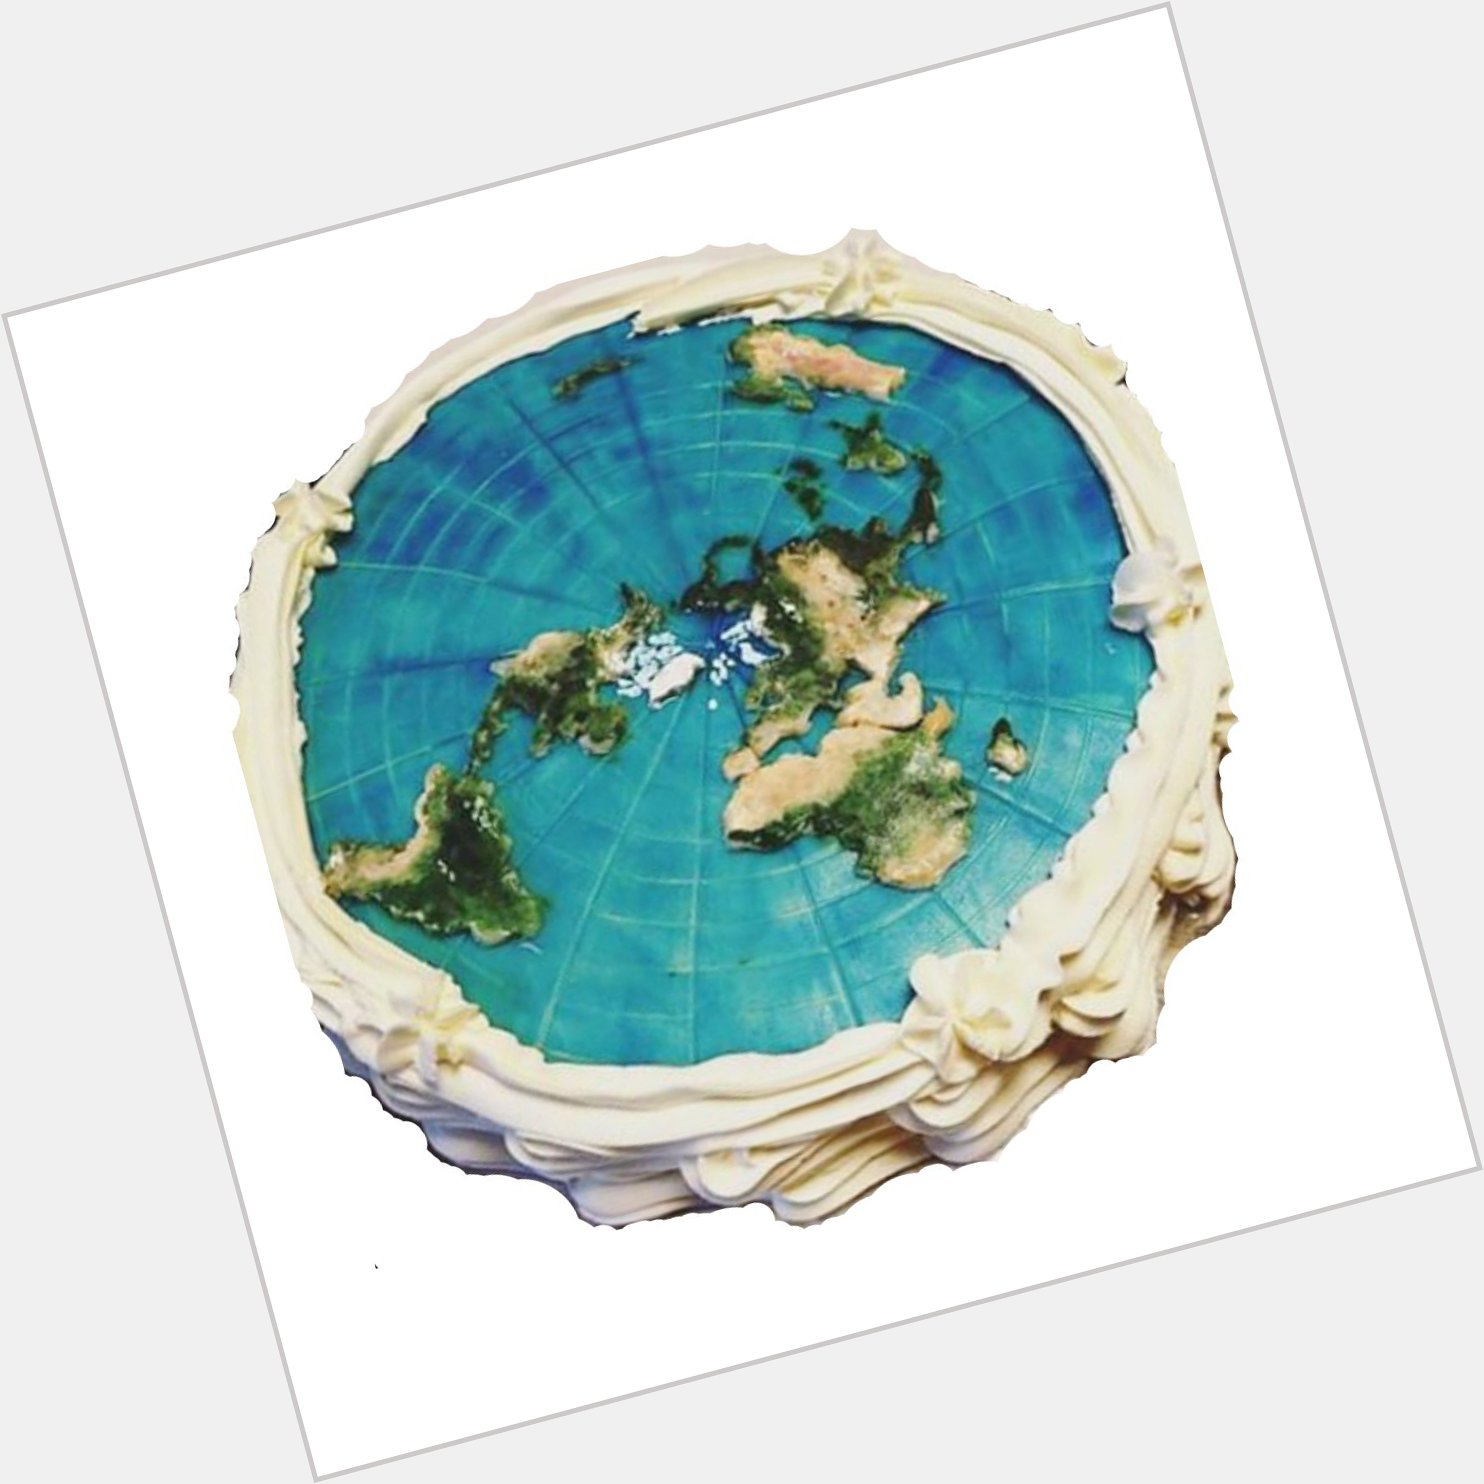    Happy flat earth Birthday, Meghan Markle!  